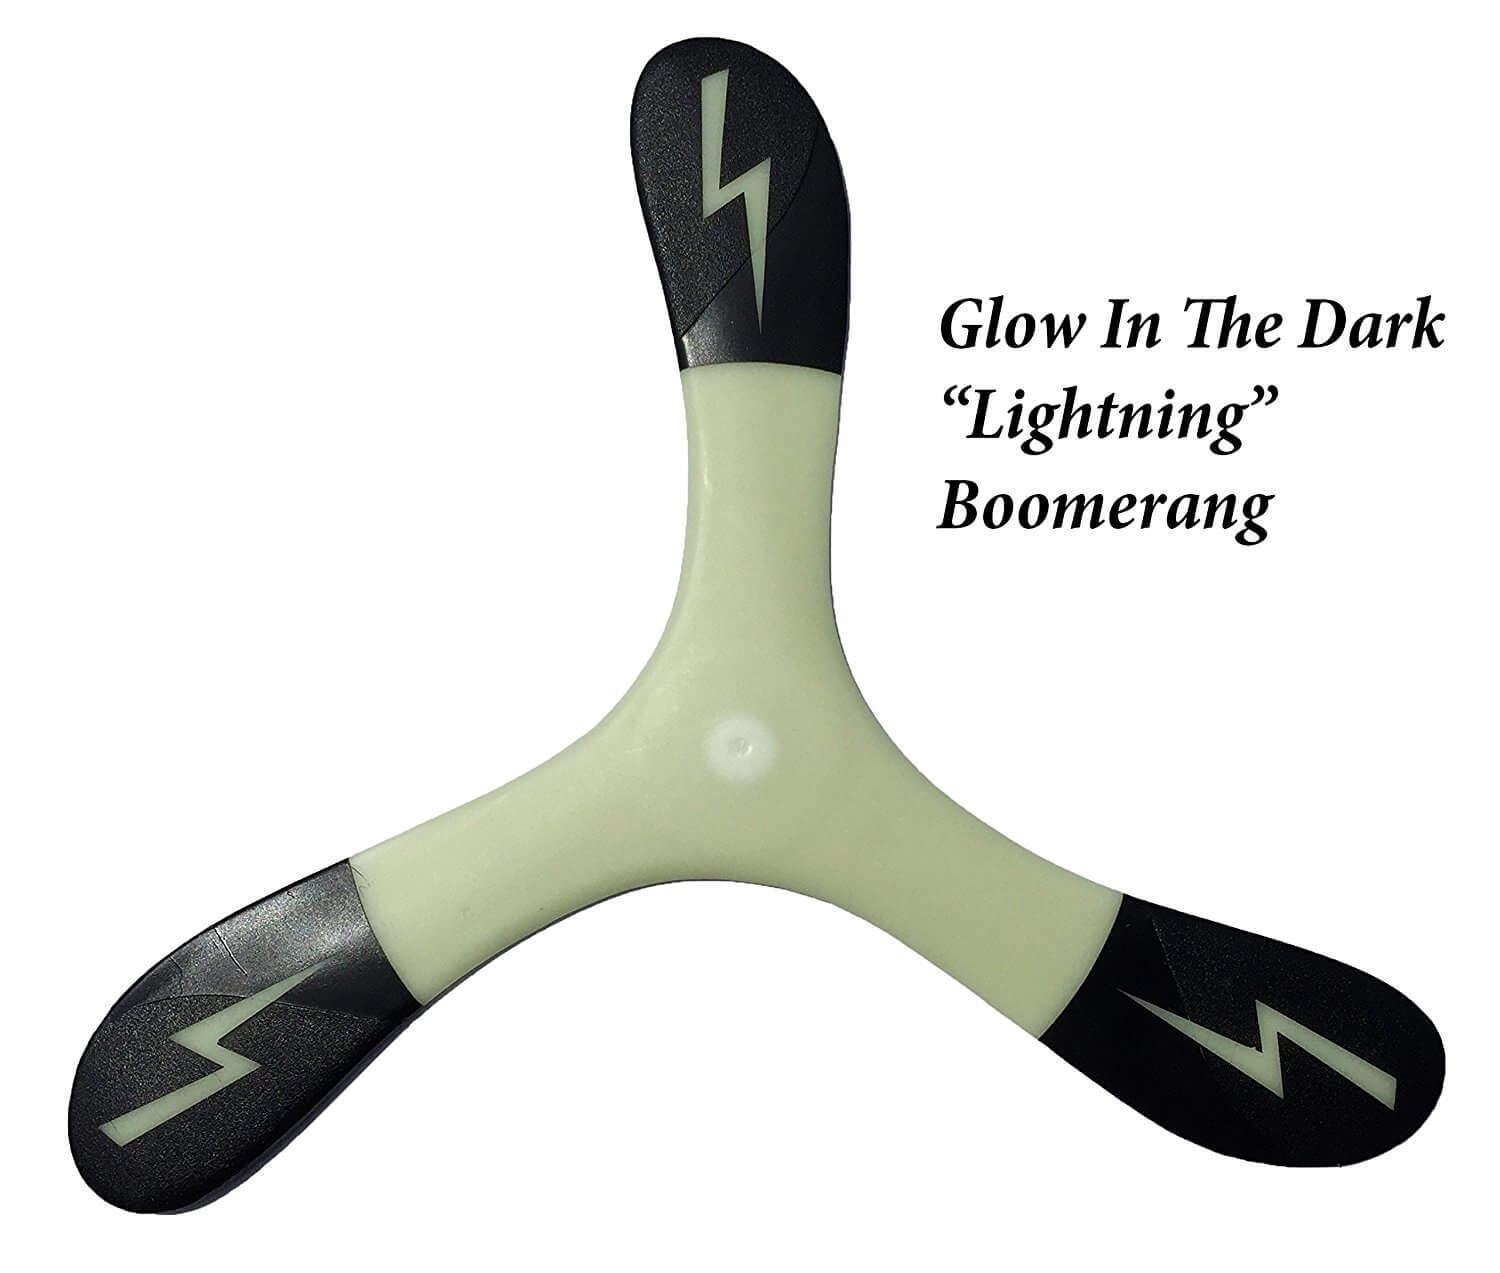 Glow In The Dark Lightning Boomerangs